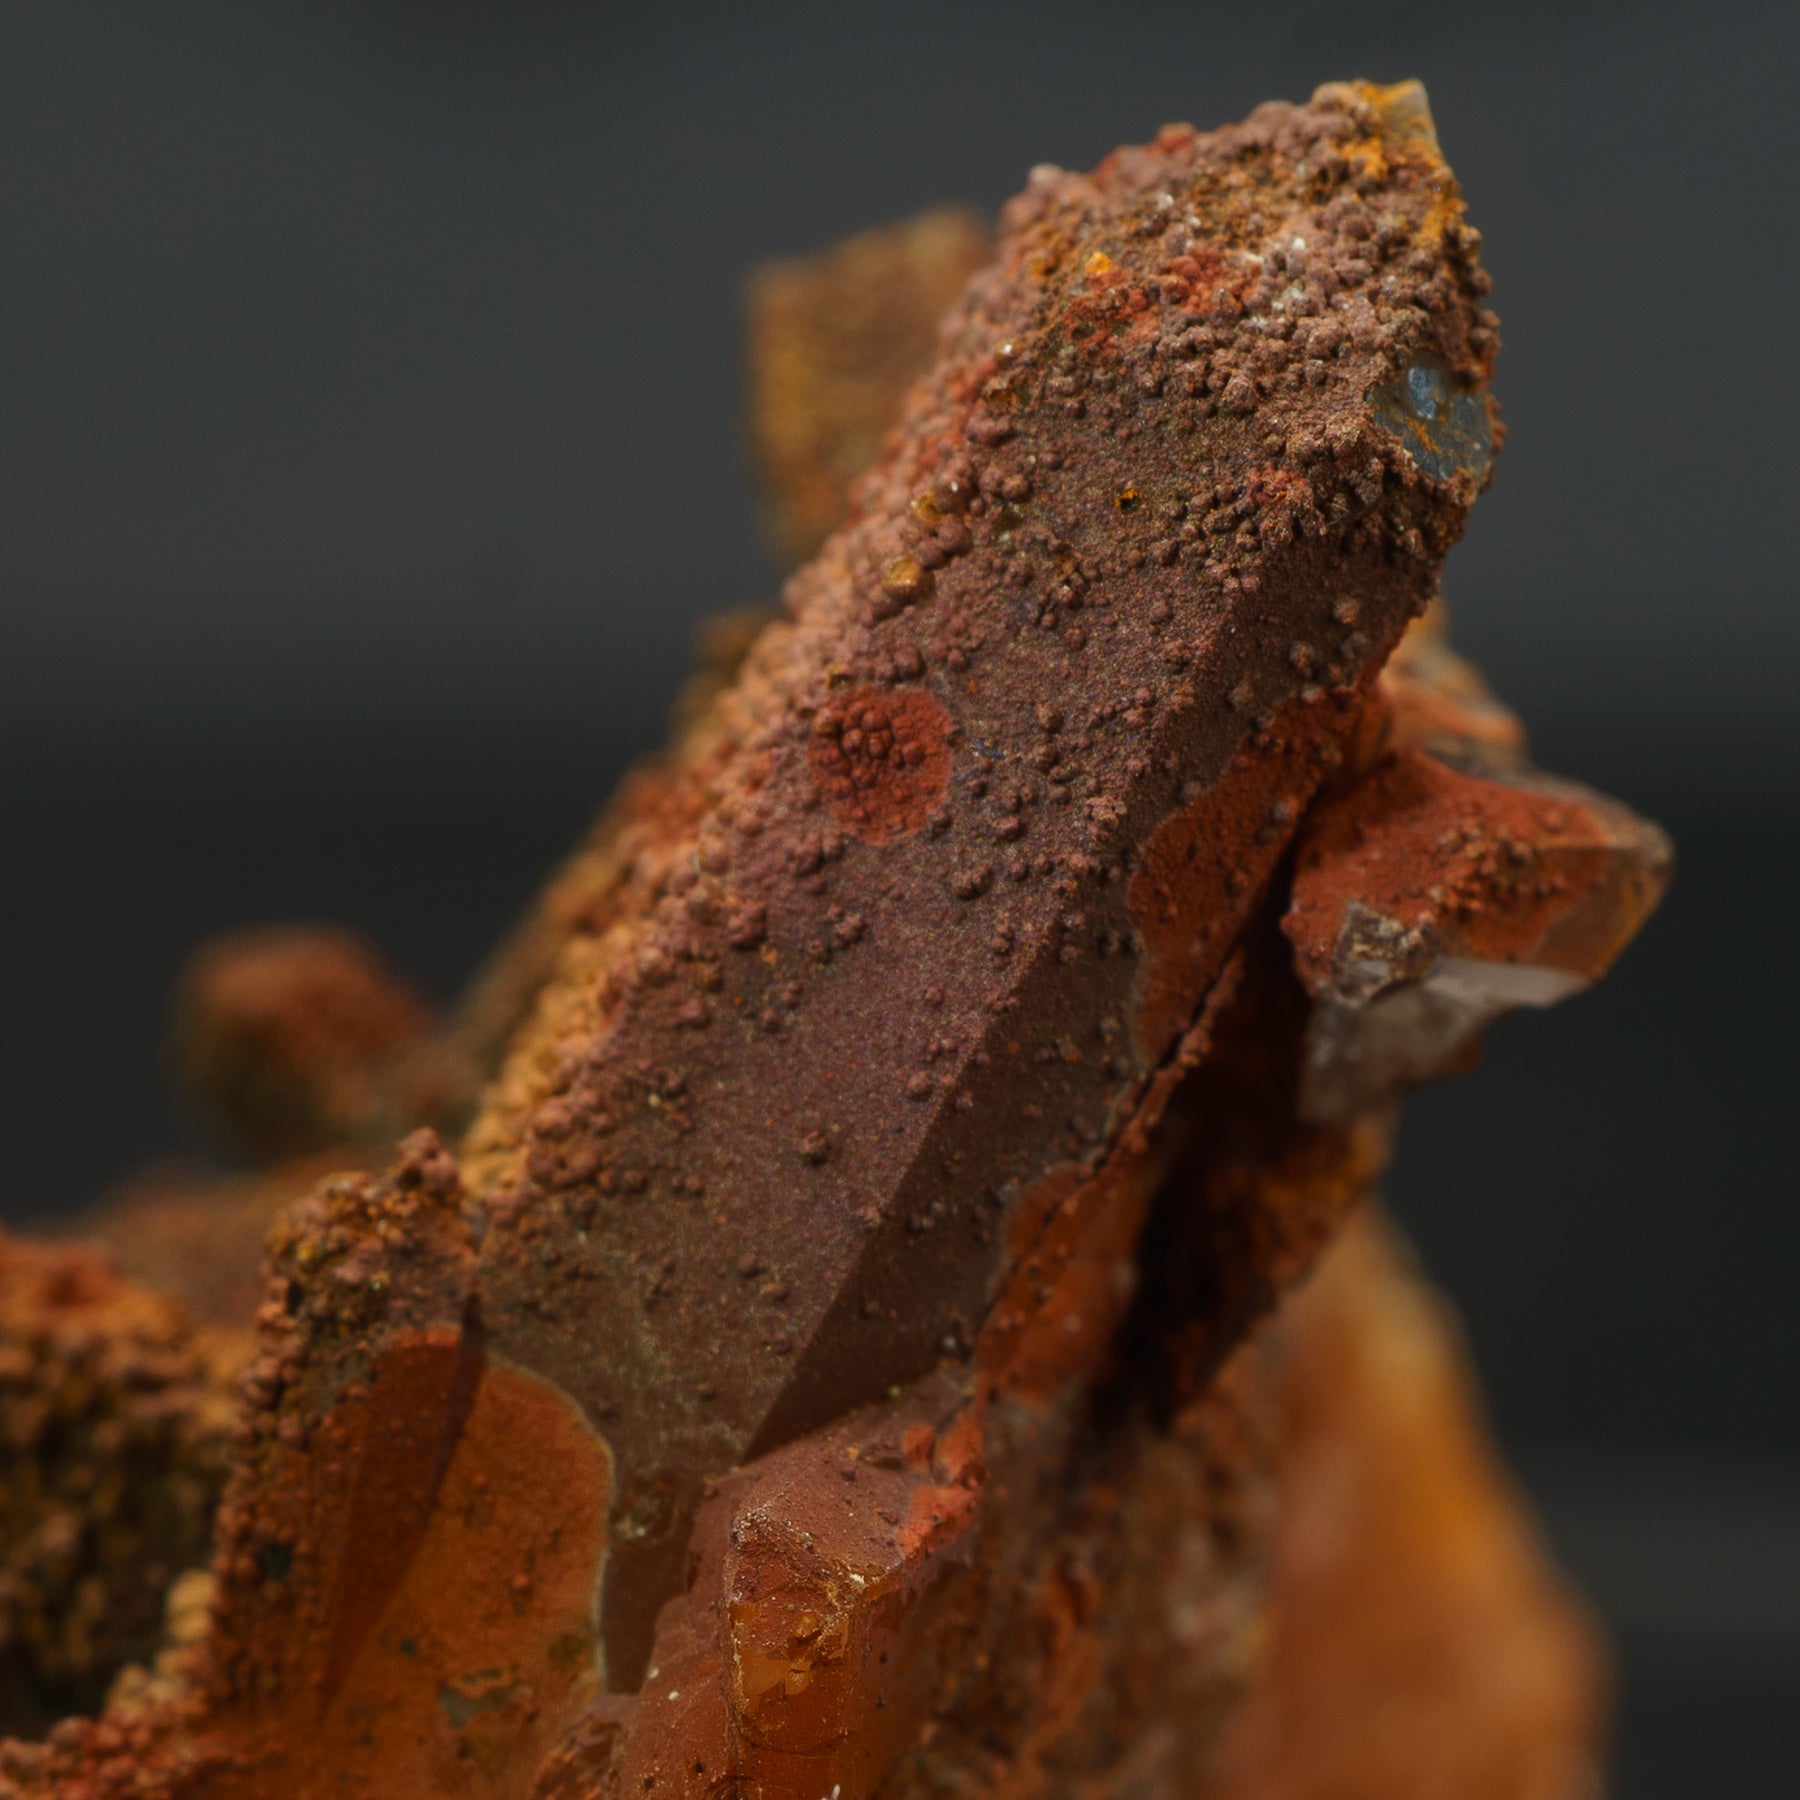 Smoky Quartz with Black Hematite, Malachite & Orange Iron Oxide 37g